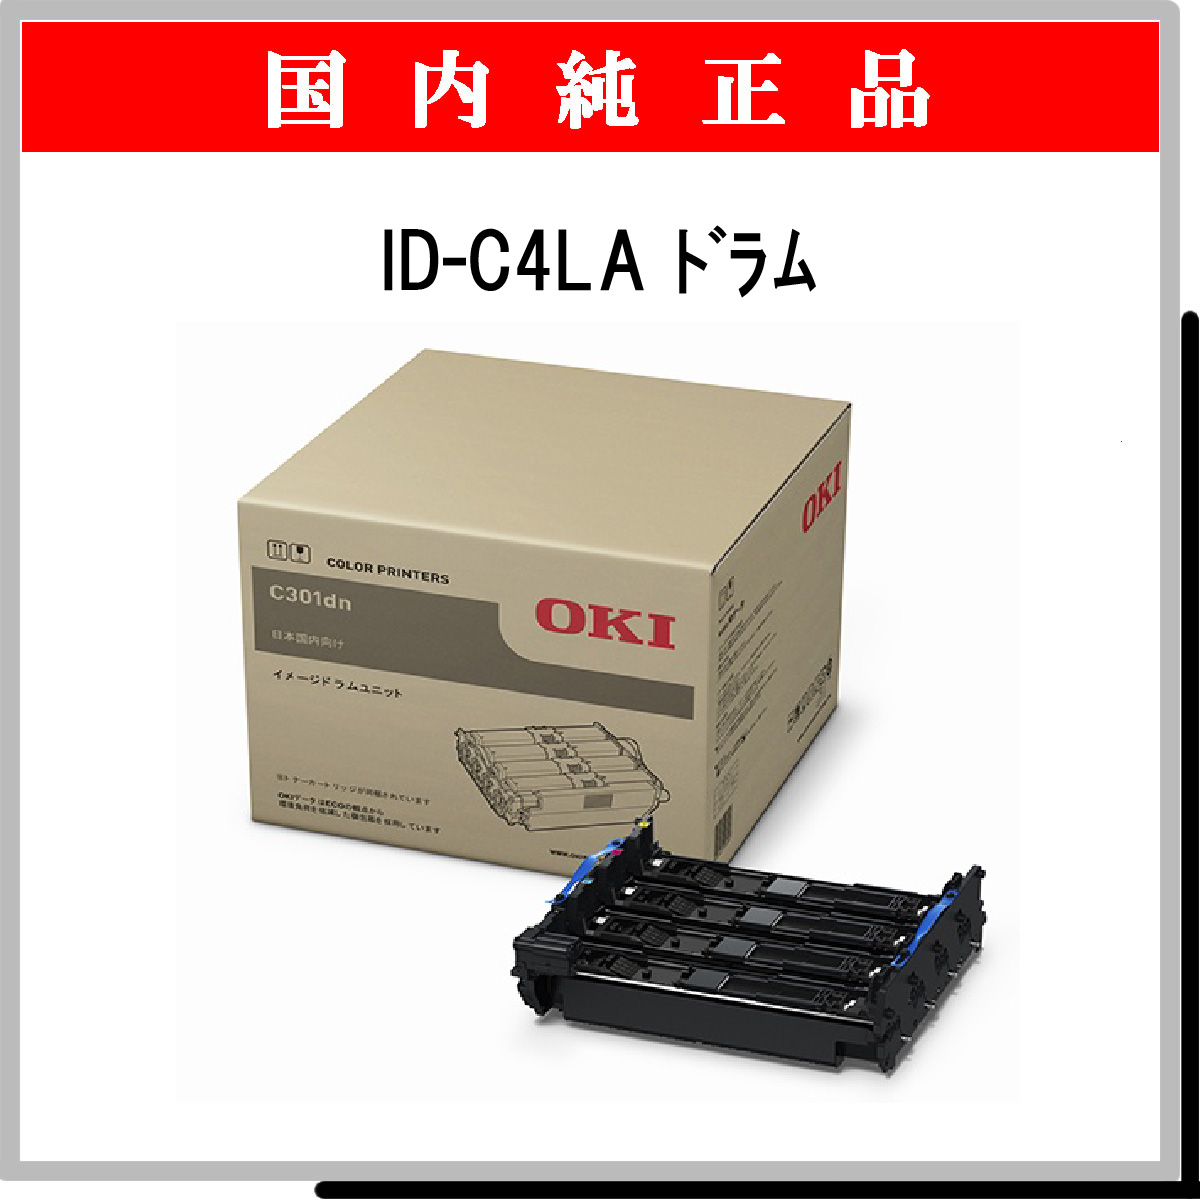 OKIデータ ID-C4LA 純正イメージドラムユニット 新品 (COREFIDO C301dn 対応) - 3